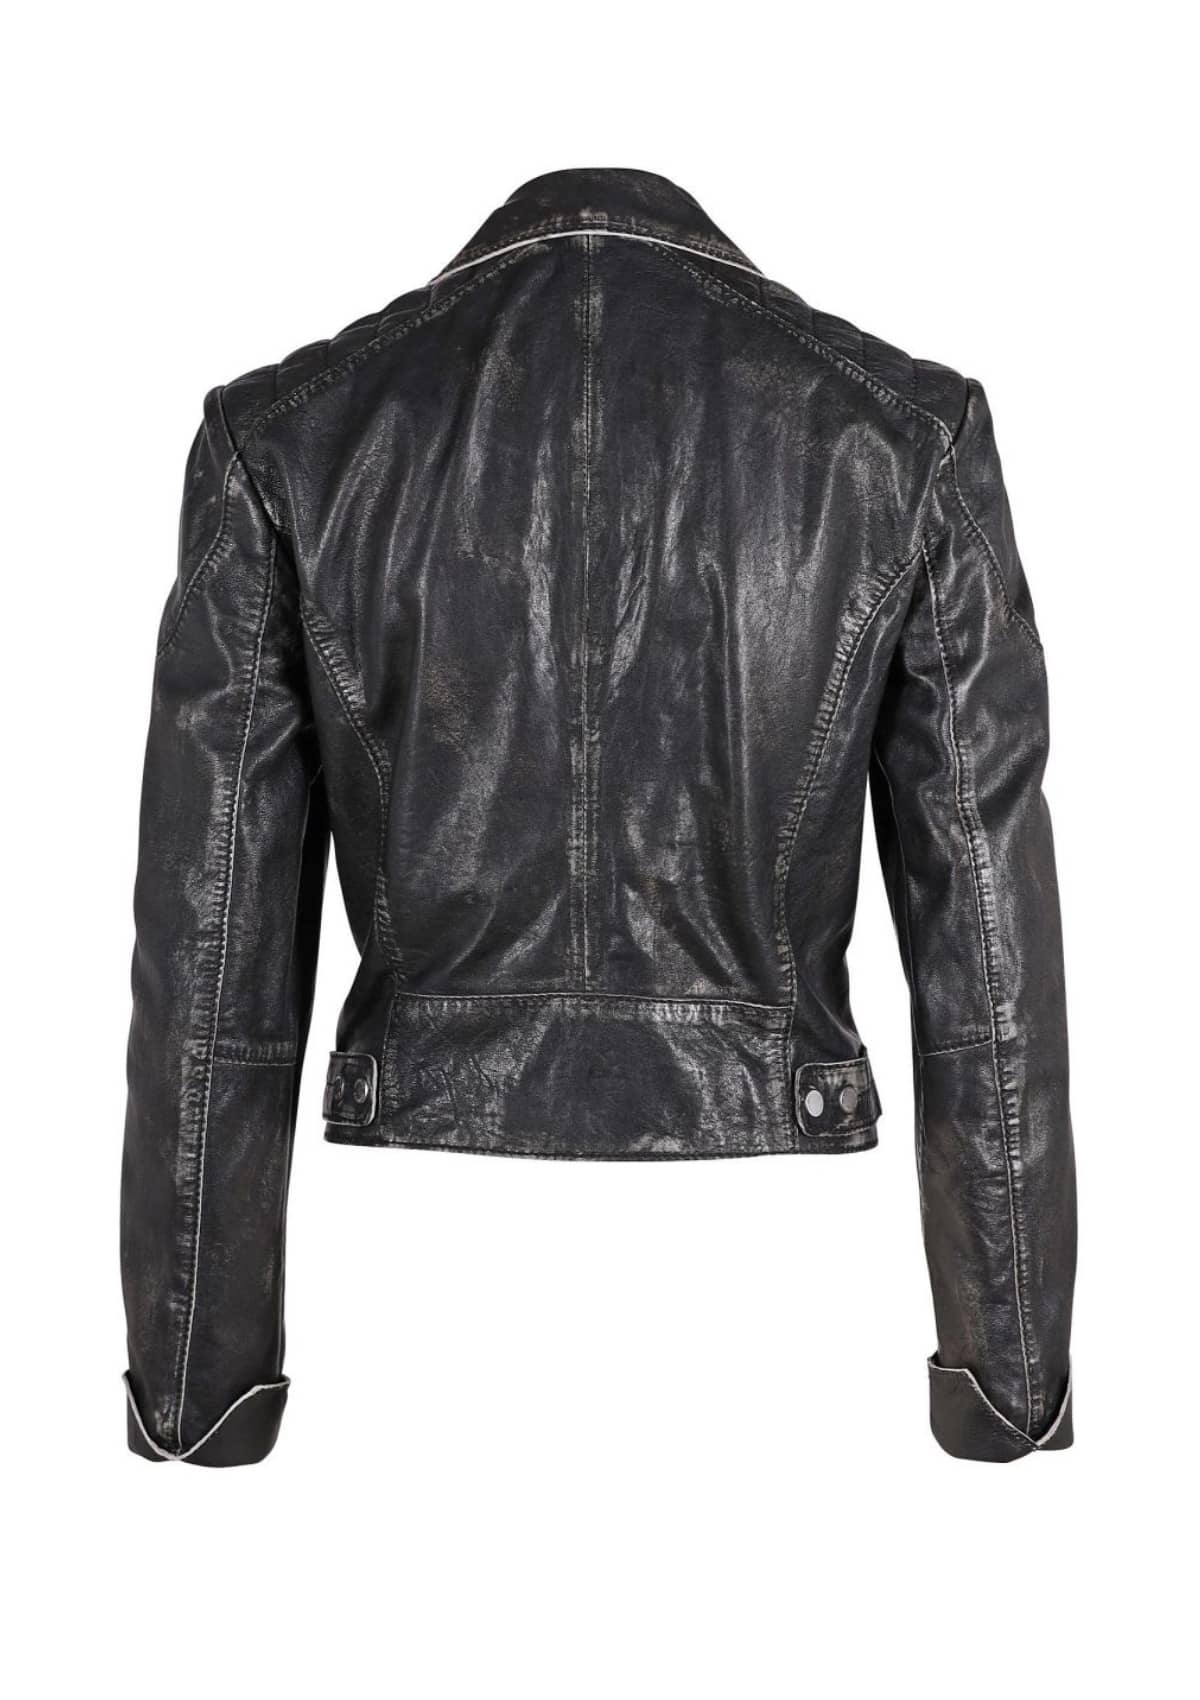 Reanon Leather Jacket - Vintage Black -Mauritius- Ruby Jane-